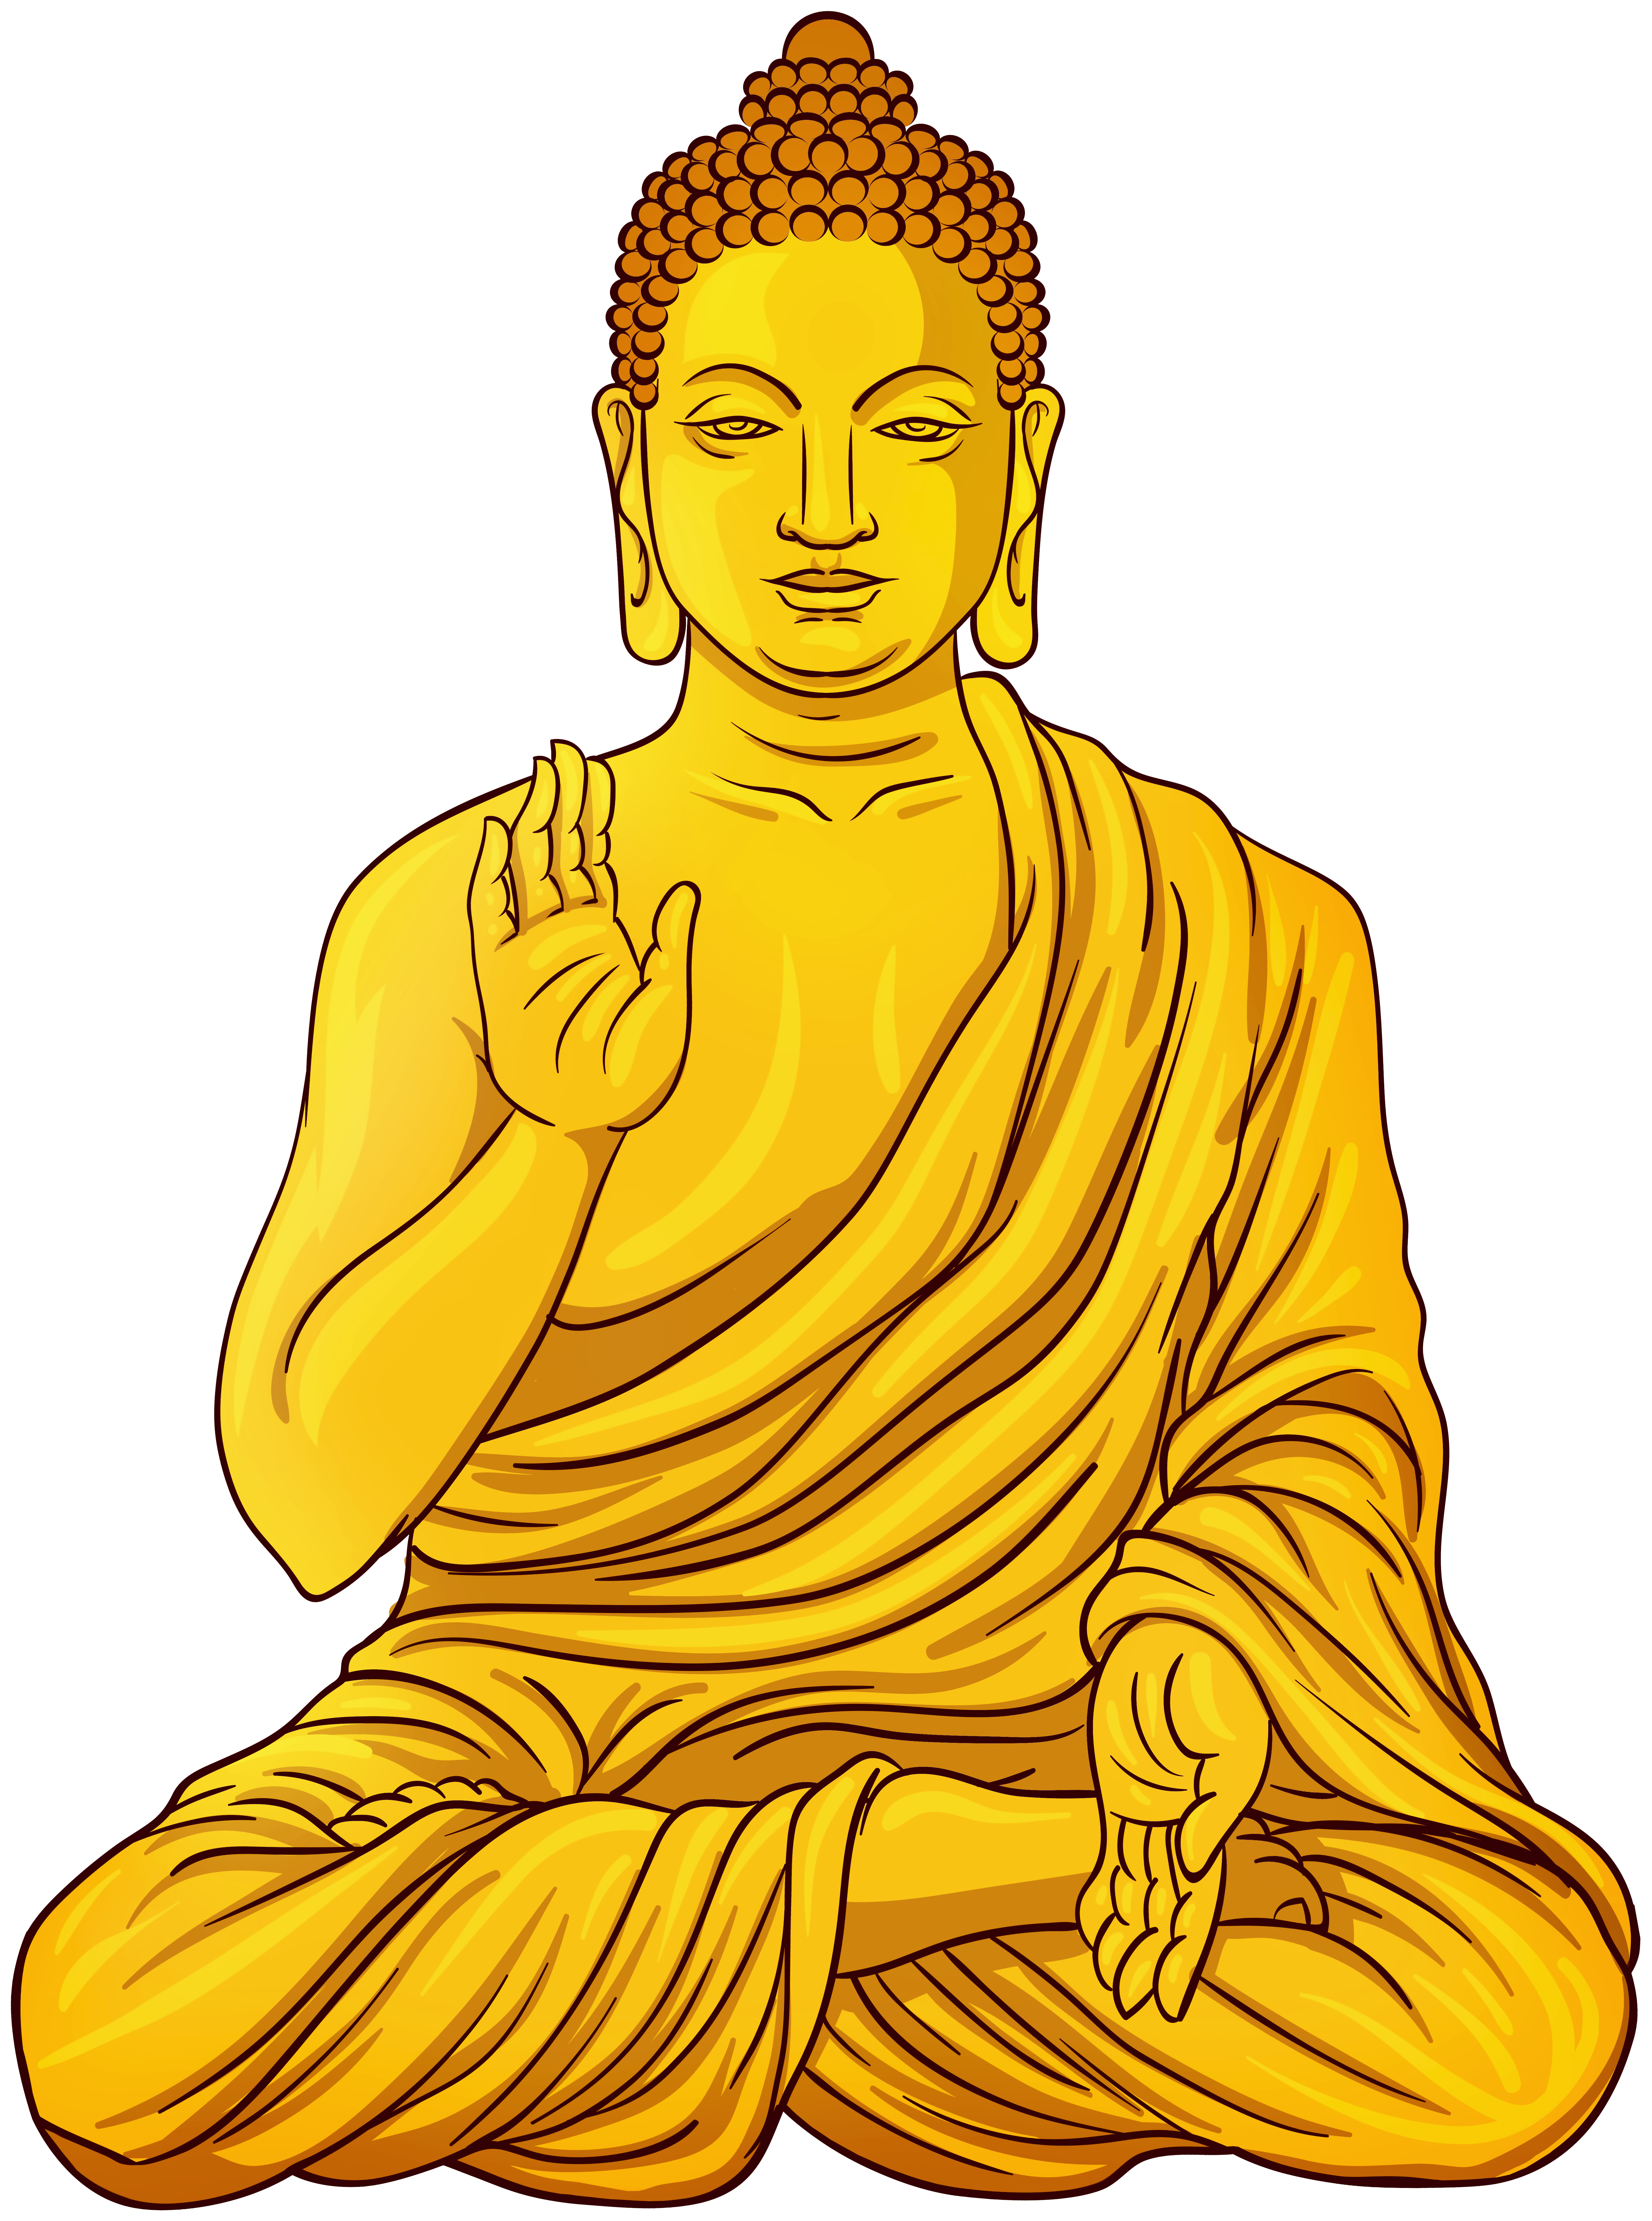 Gold Buddha Statue PNG Clip Art.